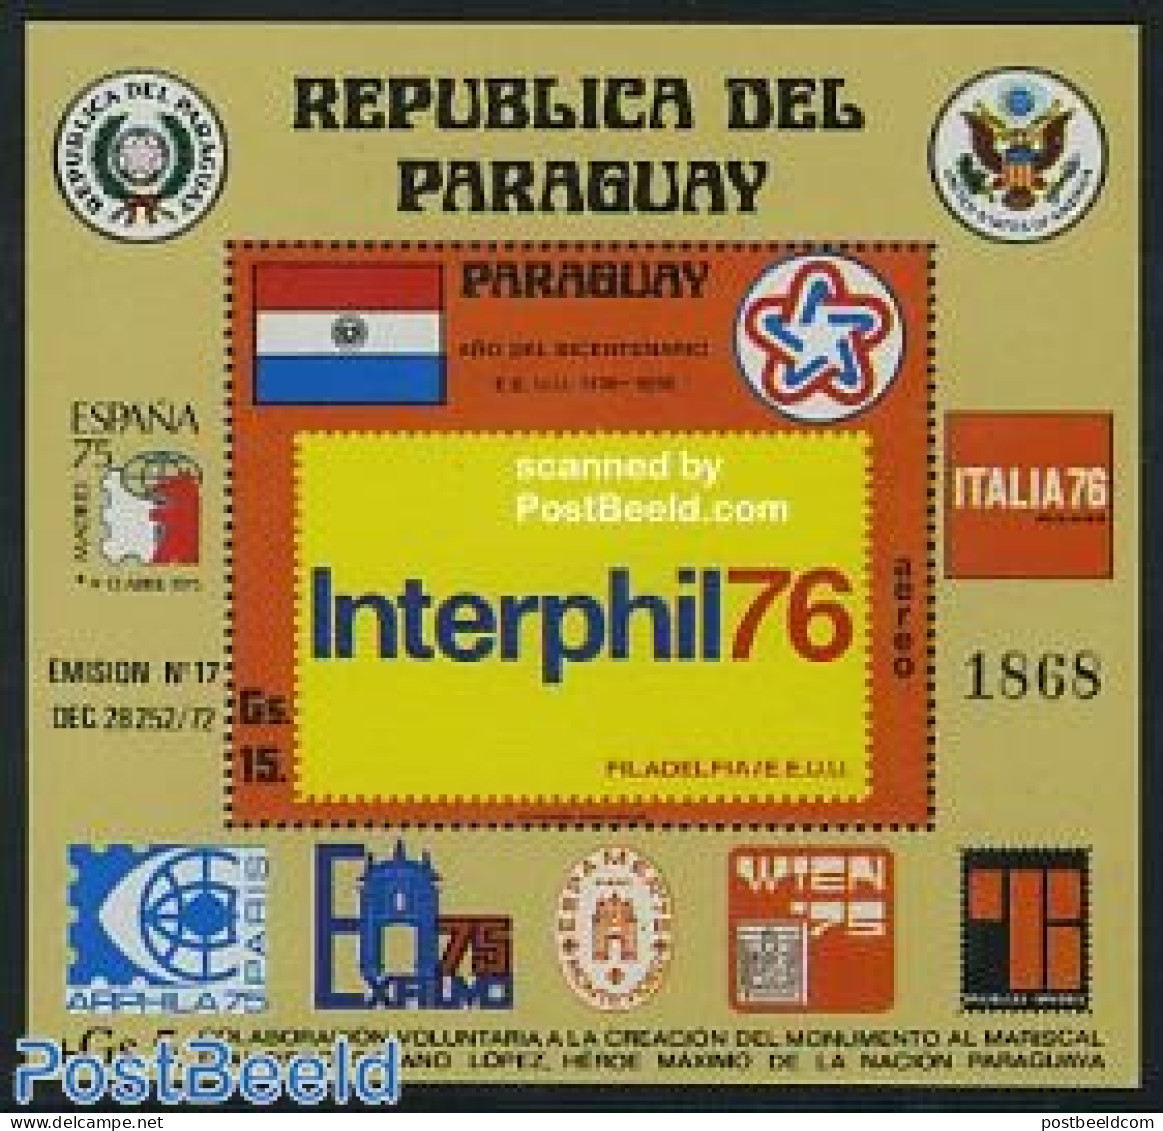 Paraguay 1976 Interphil 76 S/s, Mint NH, Philately - Paraguay